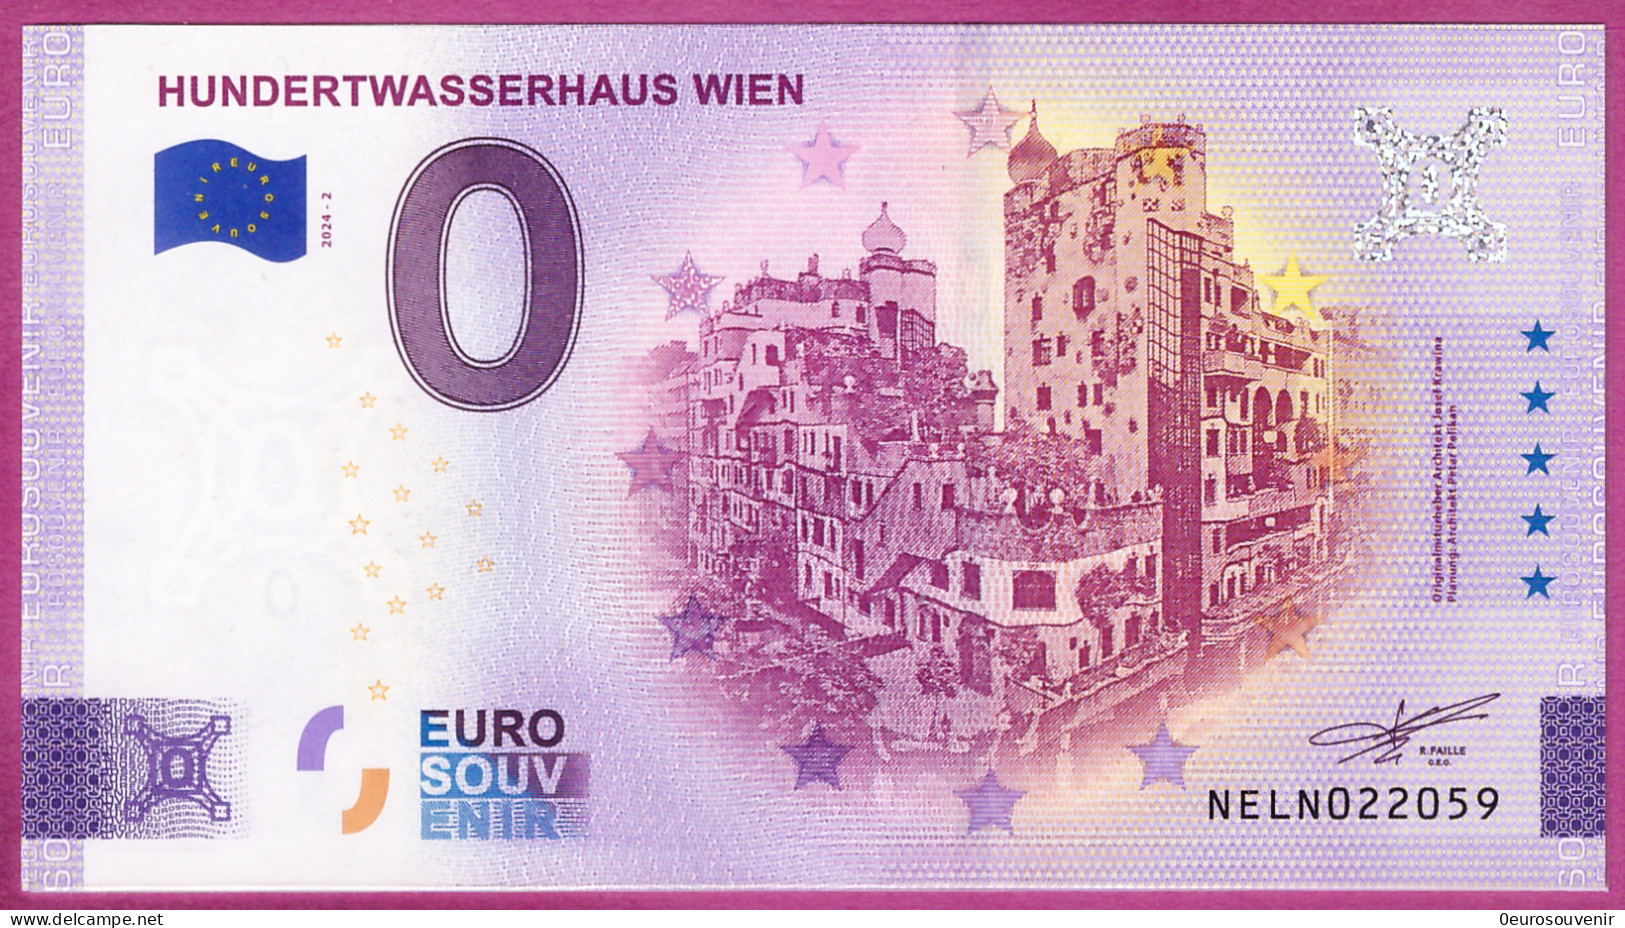 0-Euro NELN 2024-2 HUNDERTWASSERHAUS WIEN - Privatentwürfe